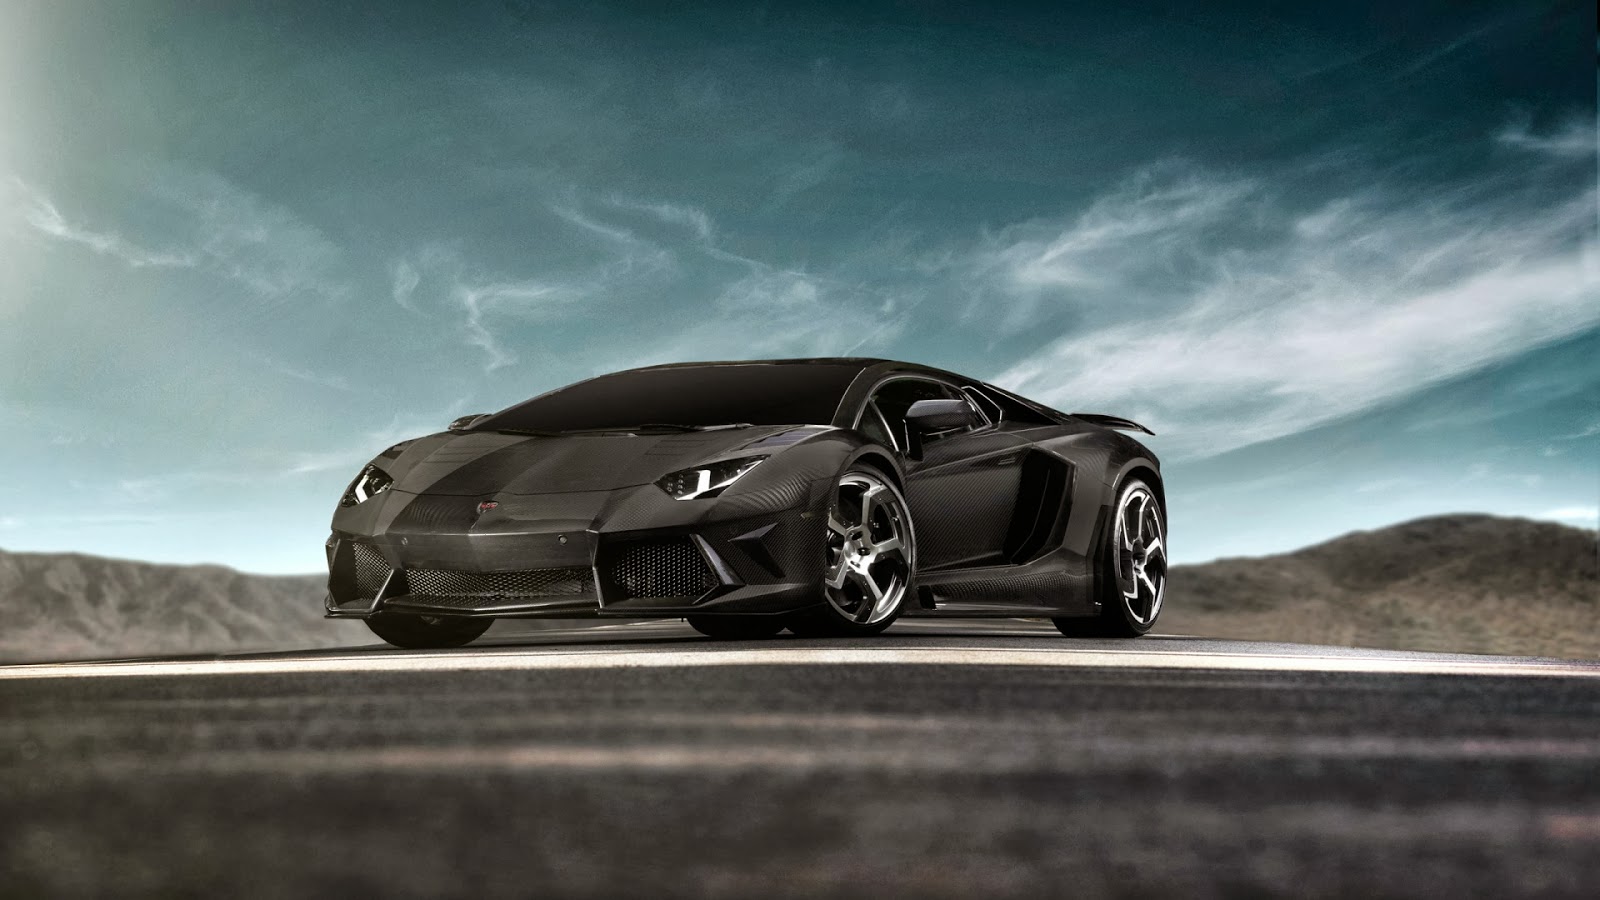 Lamborghini Aventador LP700 Black Car Full HD Desktop Wallpapers